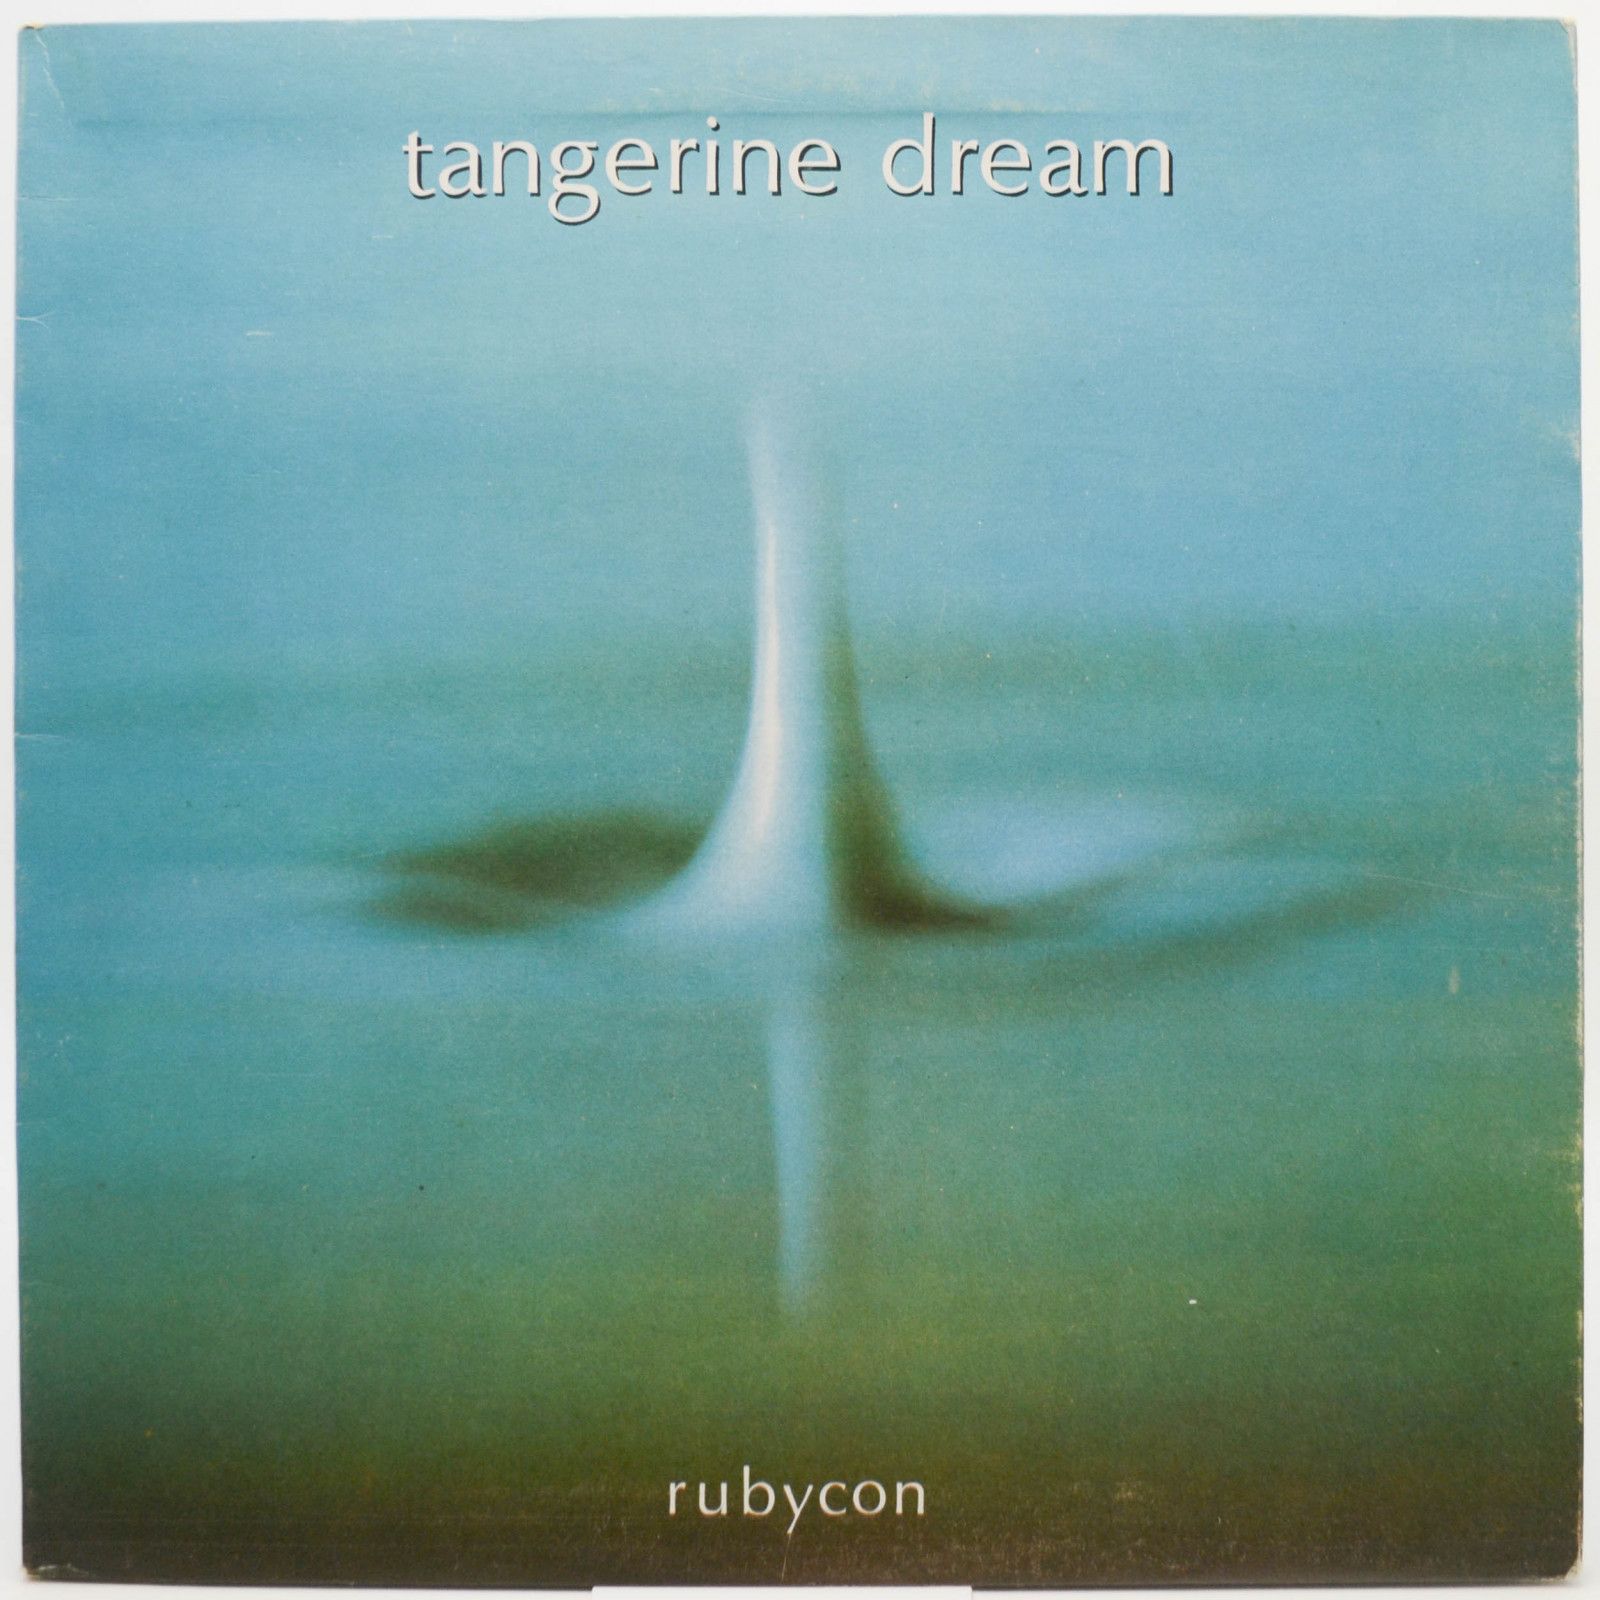 Tangerine Dream — Rubycon, 1975